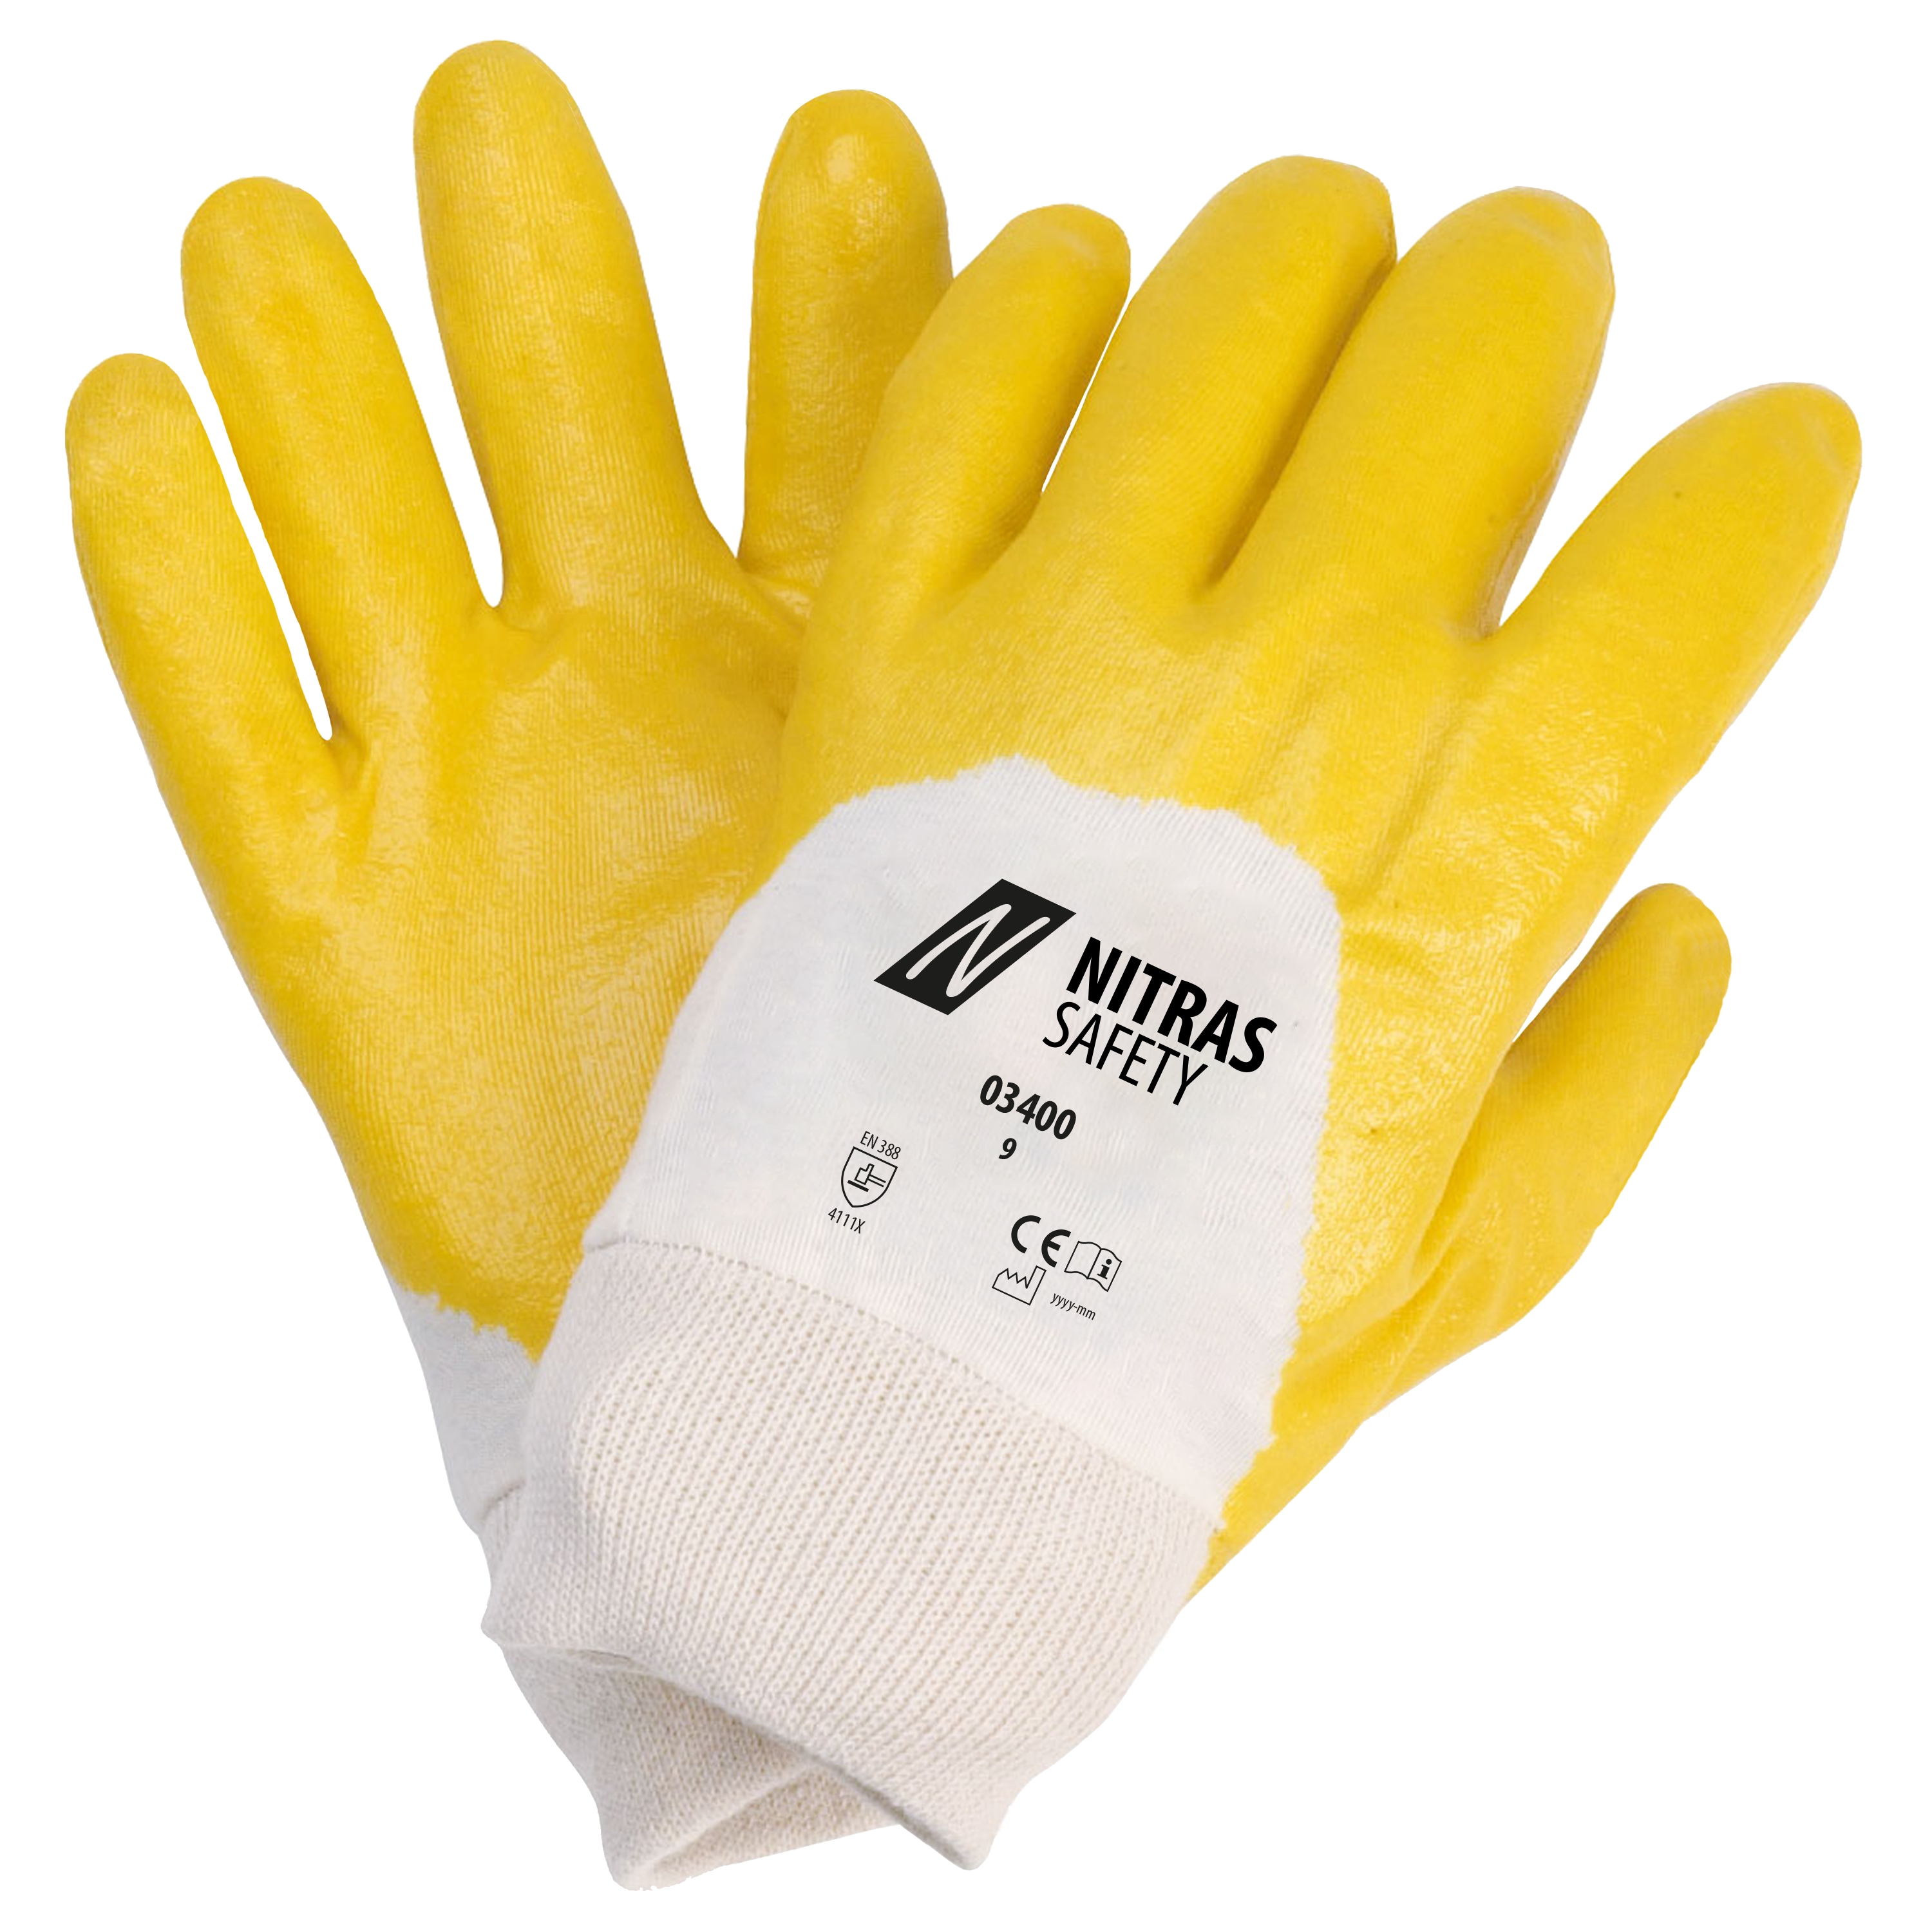 NITRAS Nitrile Gloves Cotton